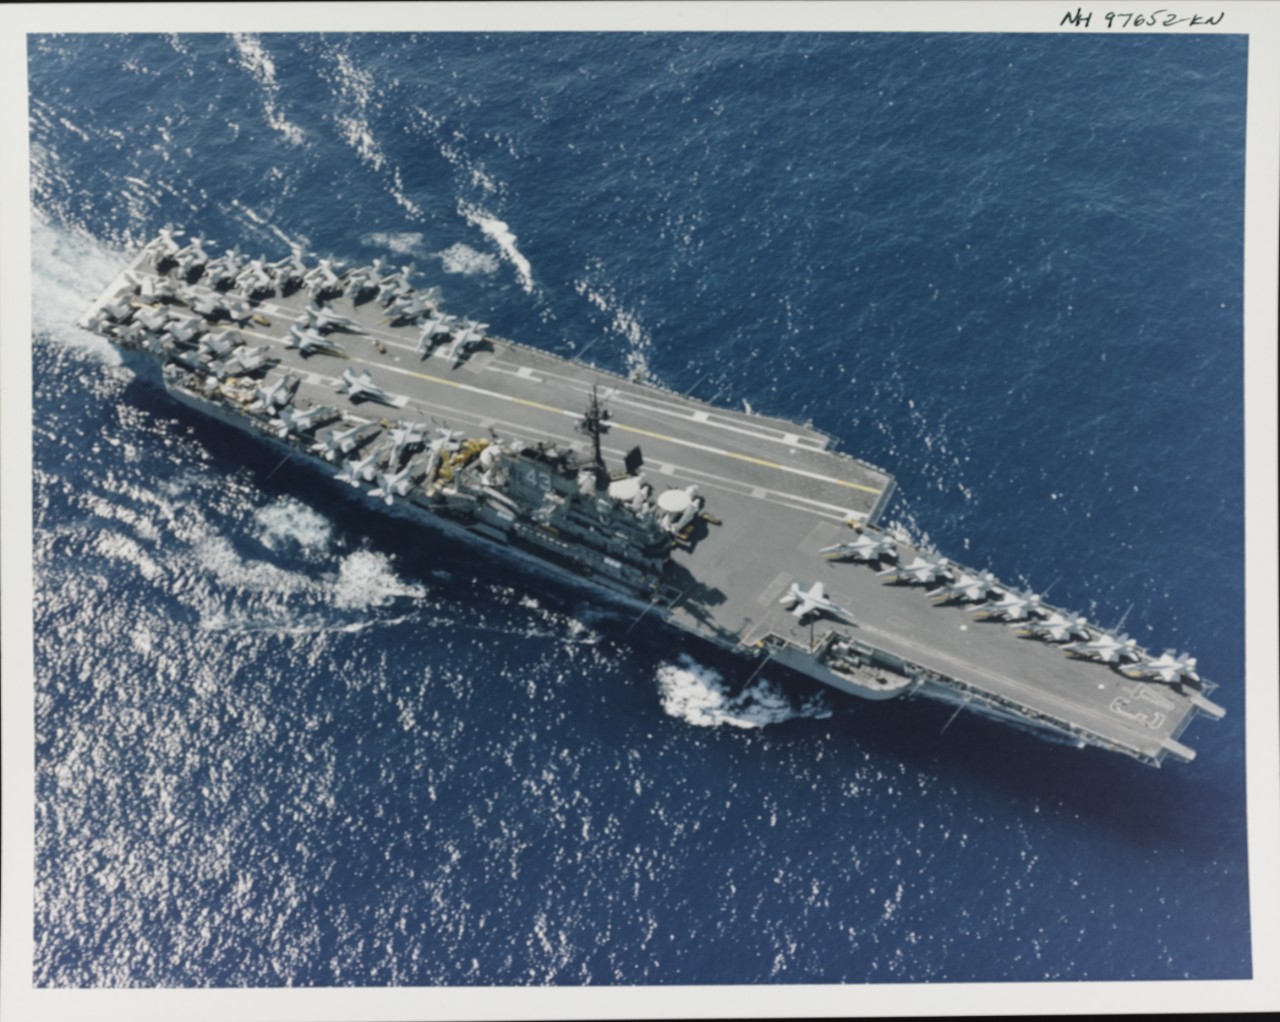 Photo #: NH 97652-KN USS Coral Sea (CV-43)